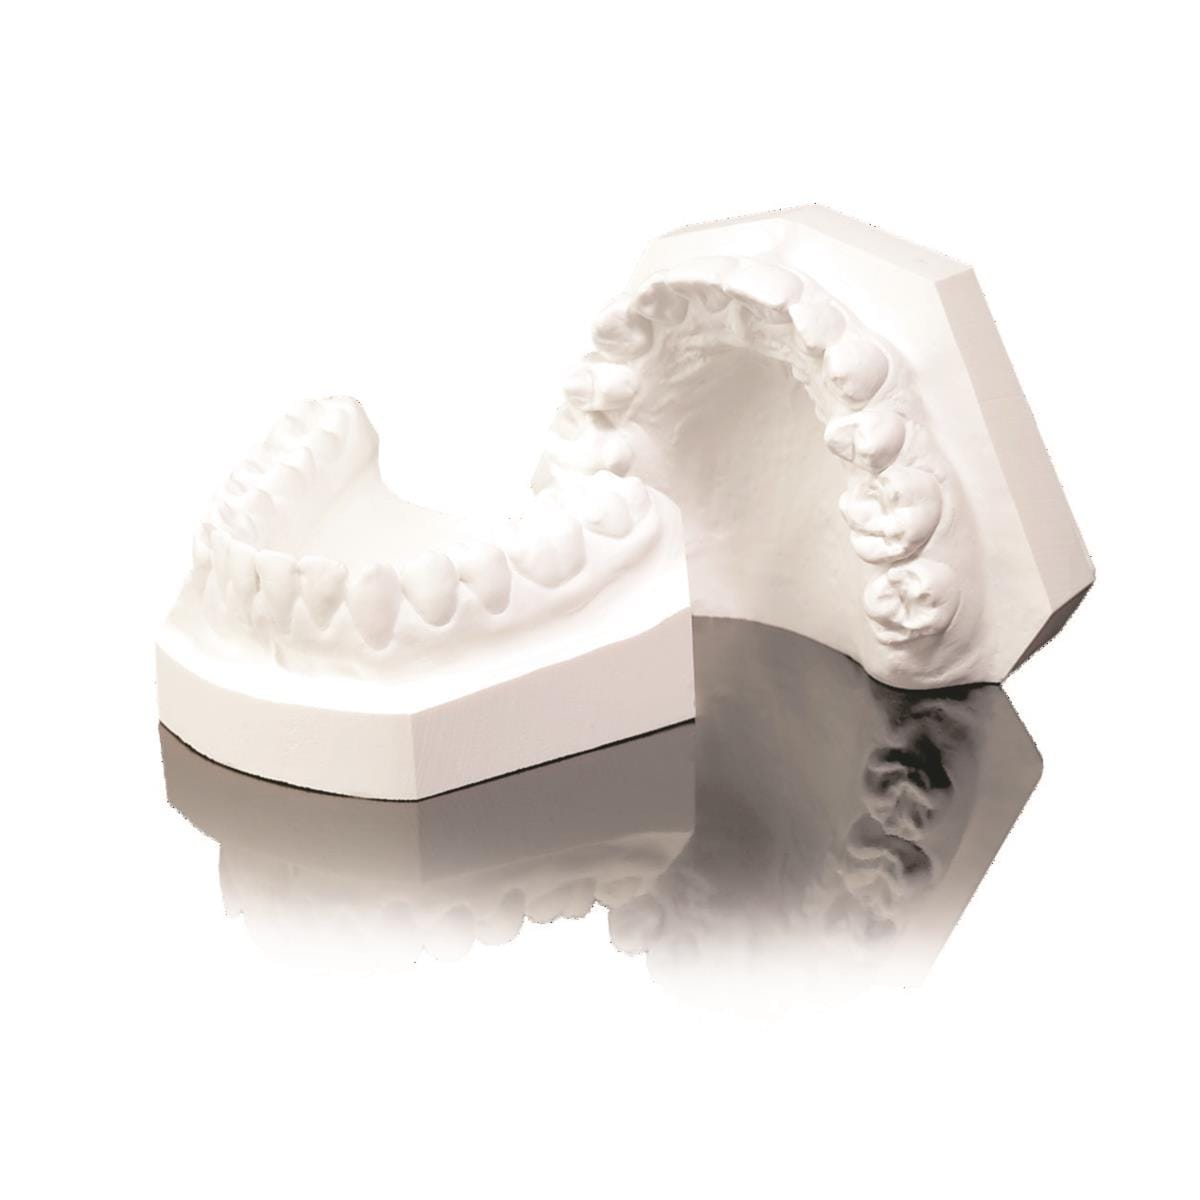 Pltre SHERABIANCO dur orthodontic blanc neige SHERA - Le carton de 20 kg